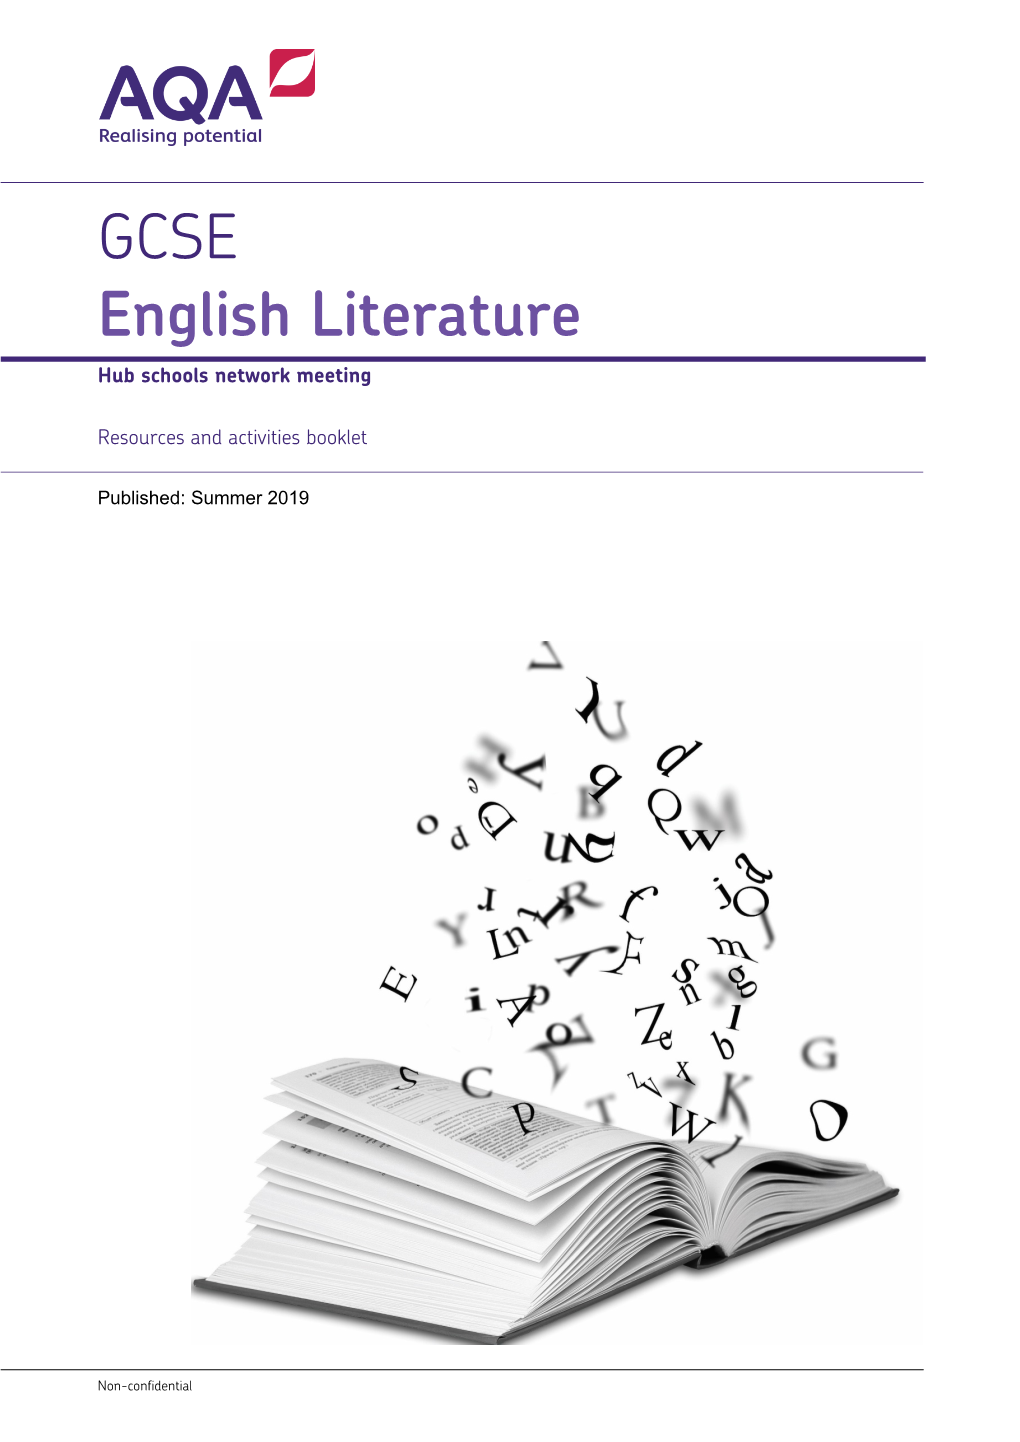 GCSE English Literature Networking Hubs Activites Booklet